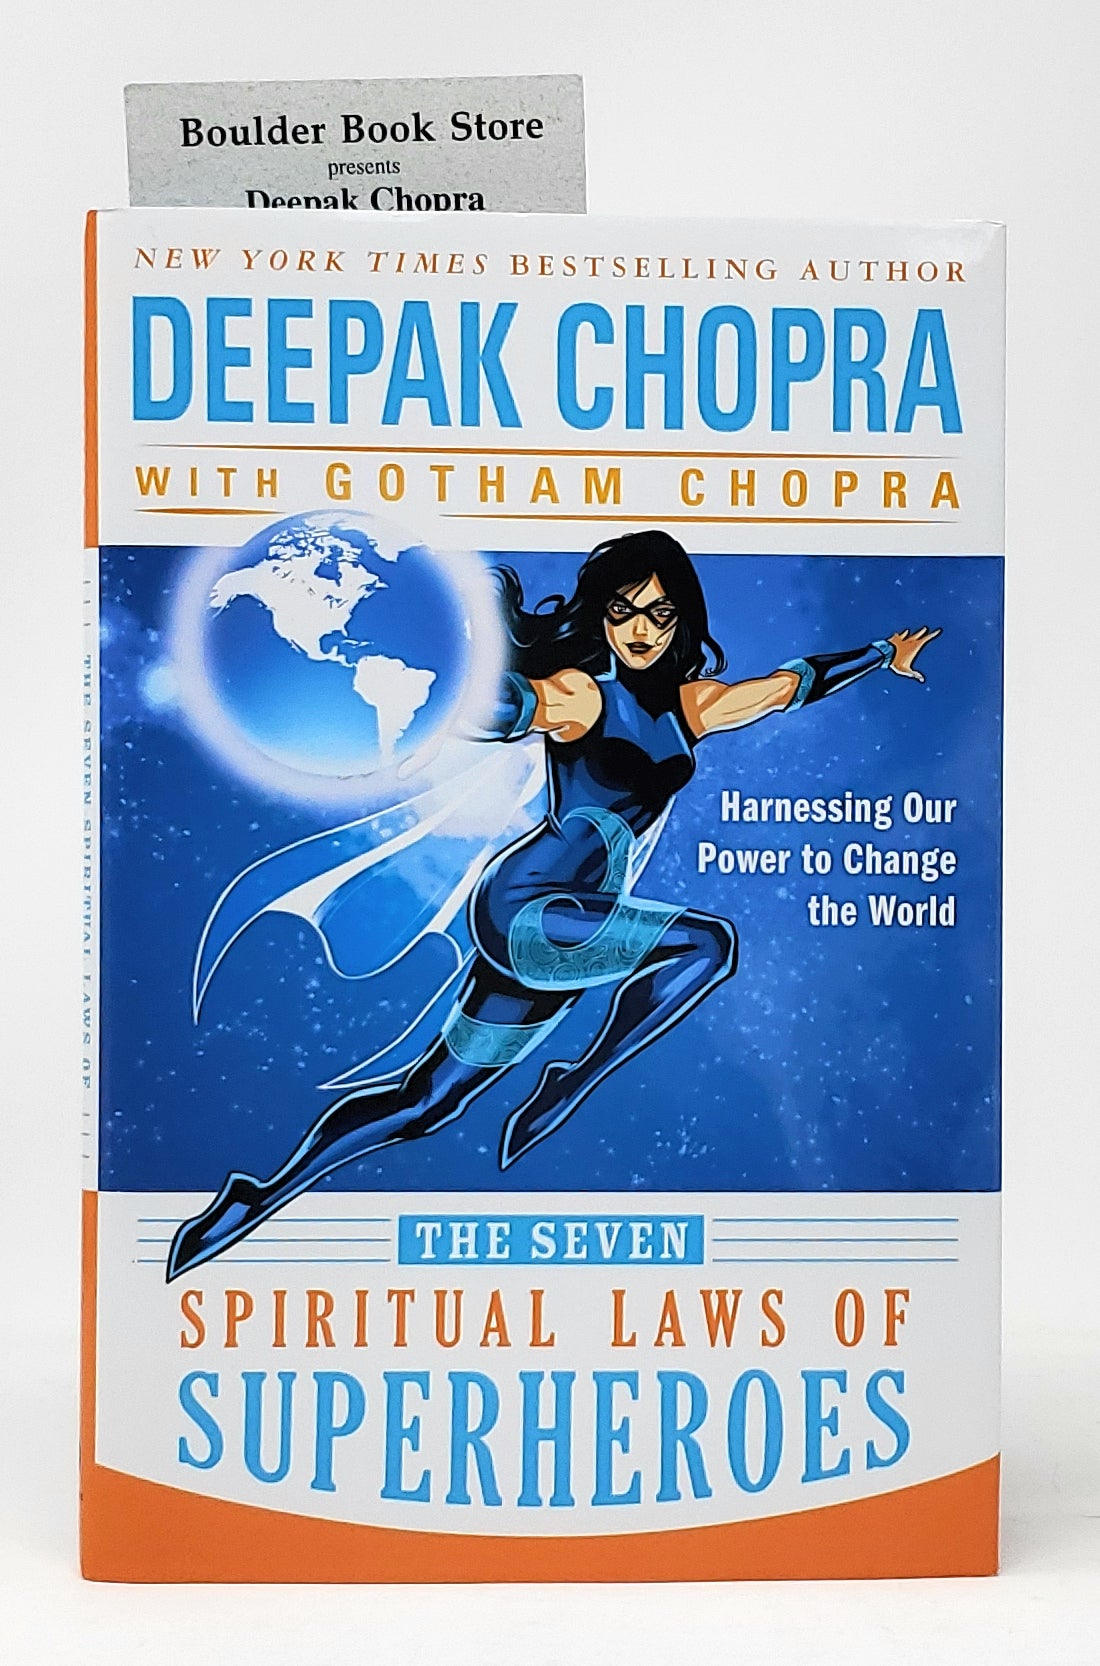  Deepak Chopra: books, biography, latest update